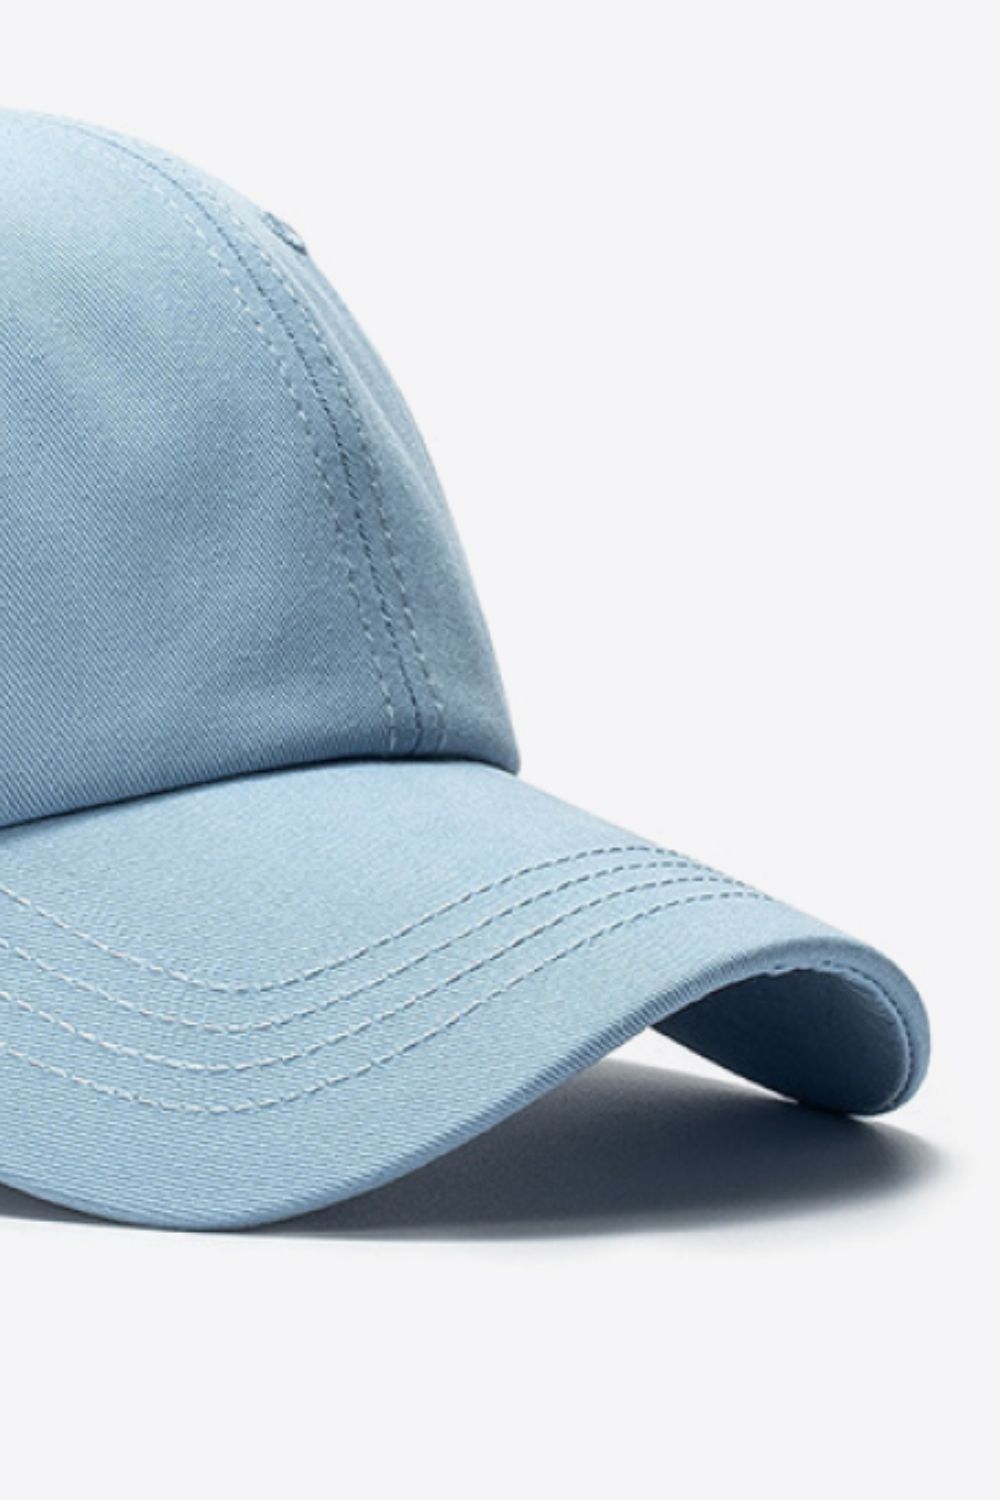 Cotton Baseball Hat light blue brim